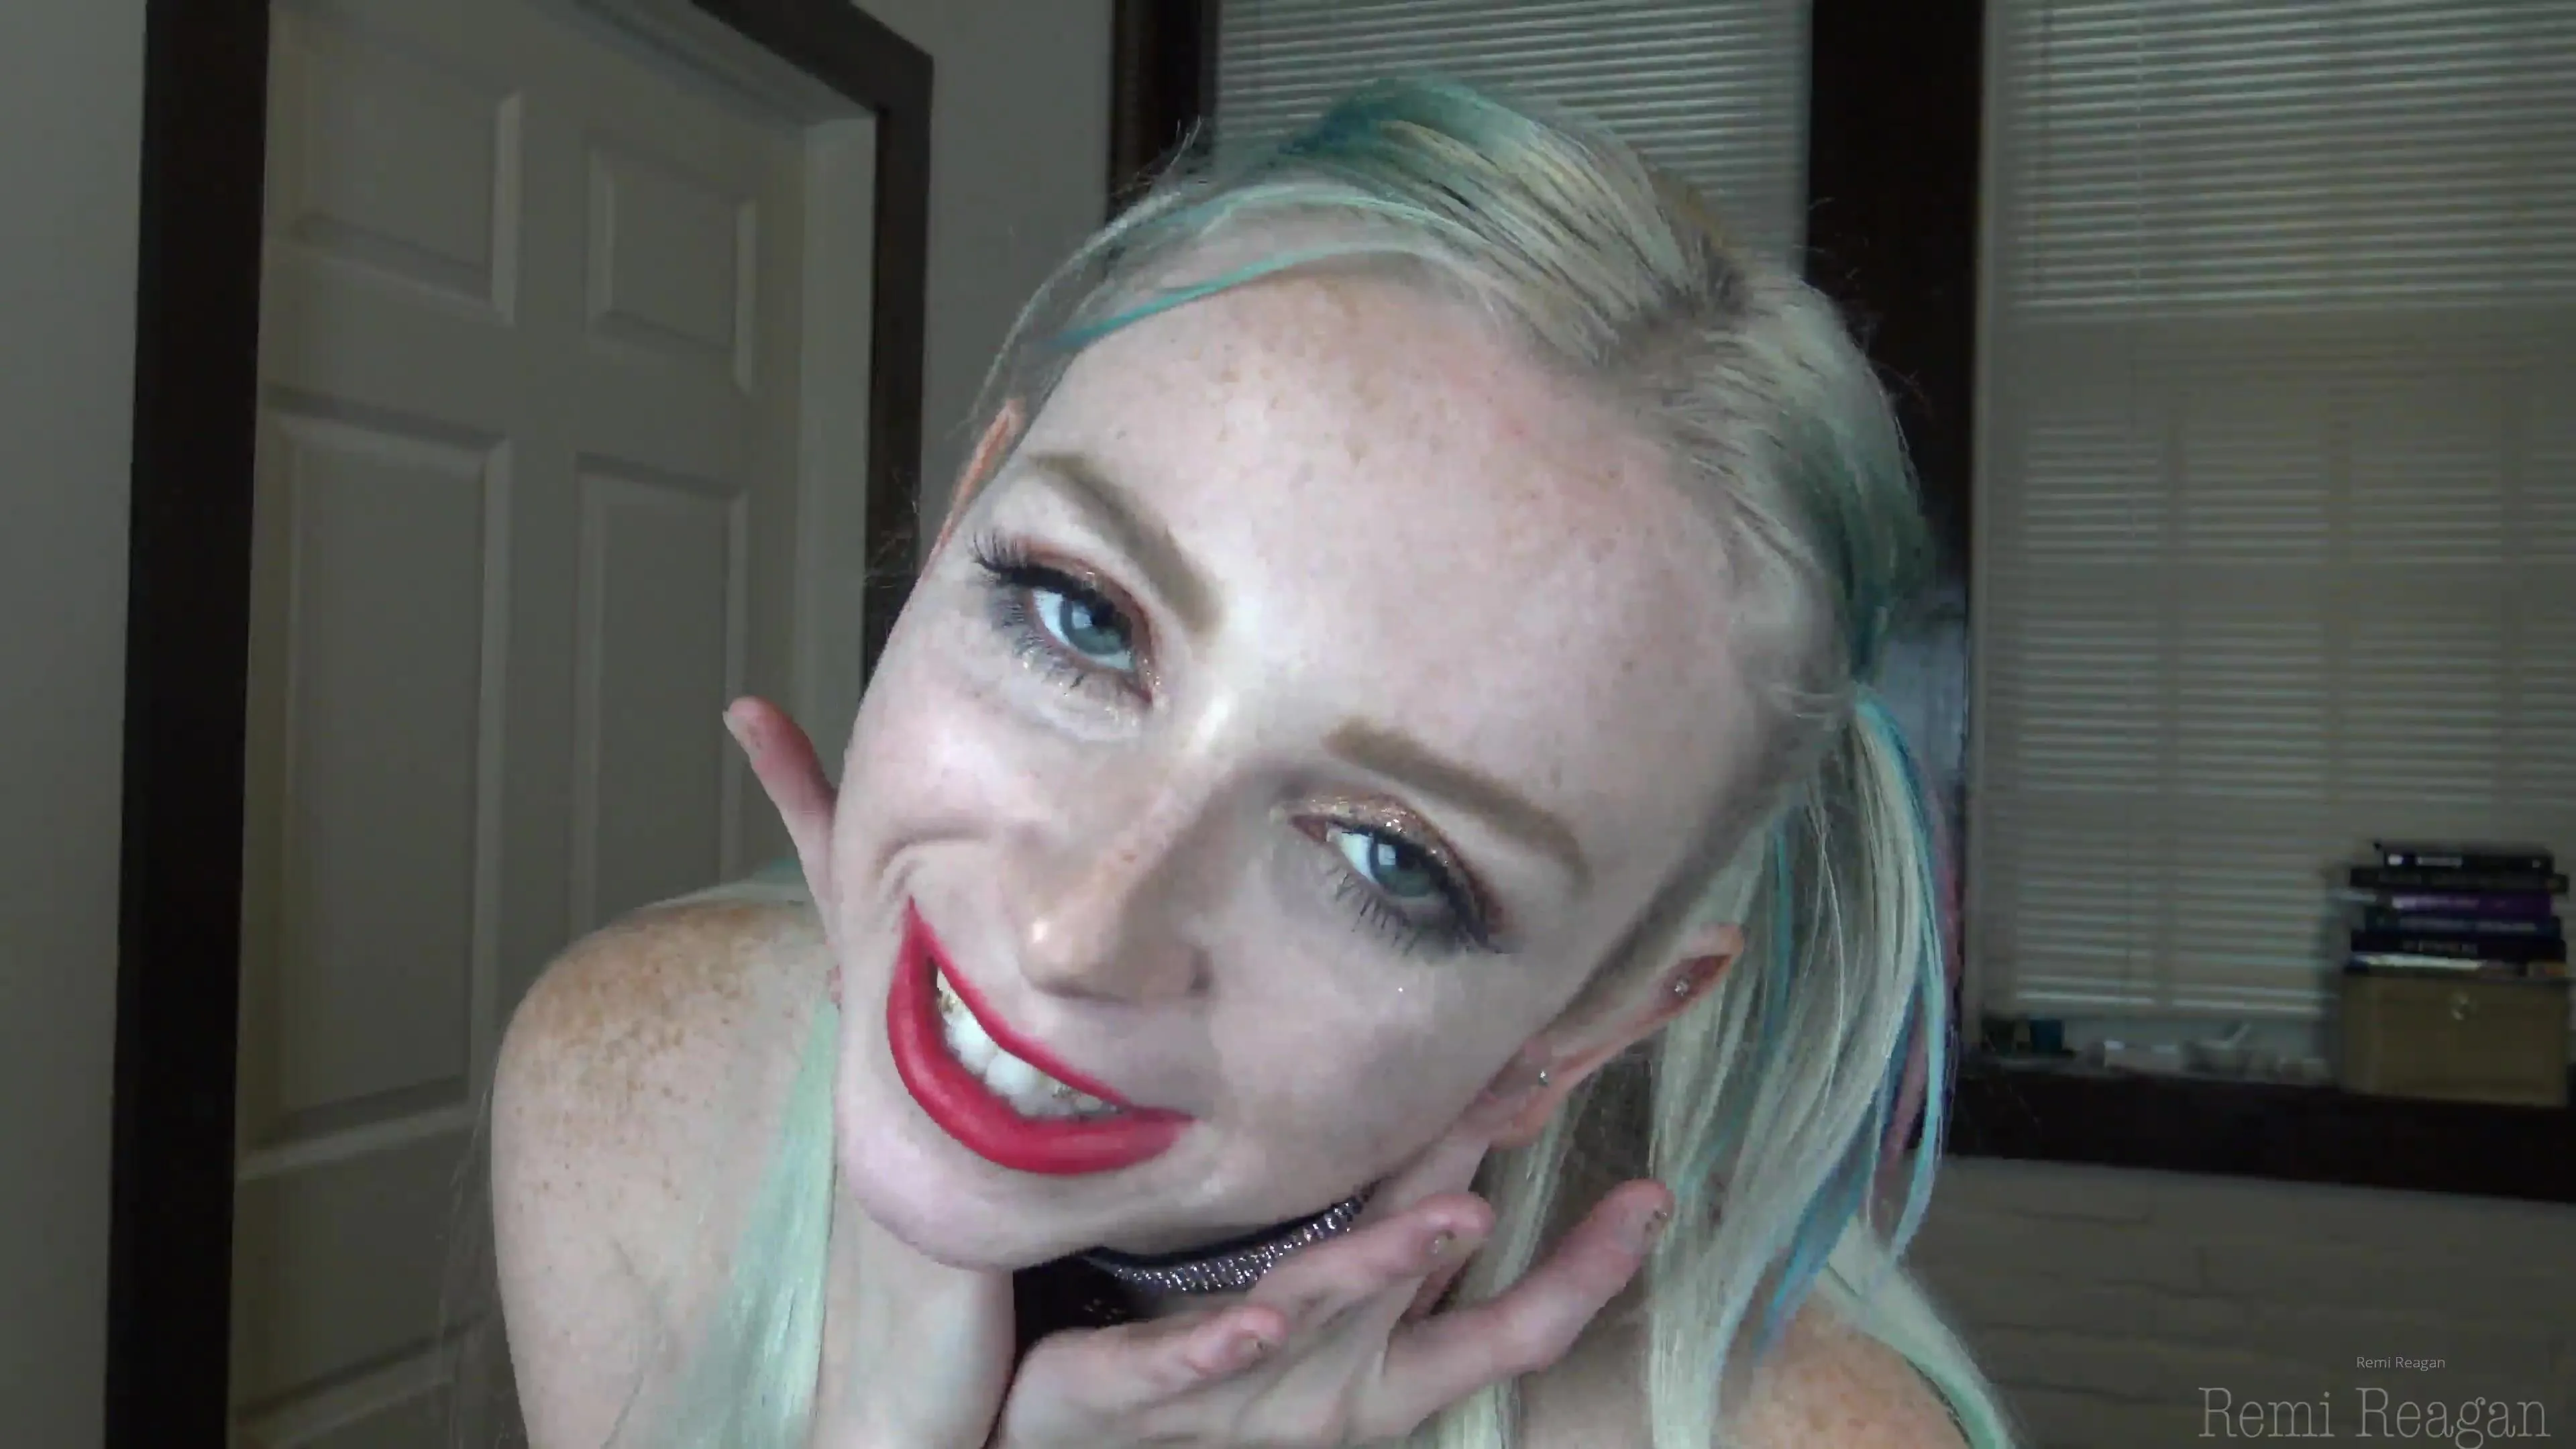 Fetish Role Porn - Remireagan Full 4K Video Joi Face Fetish Harley Quinn Roleplay xxx onlyfans  porn videos